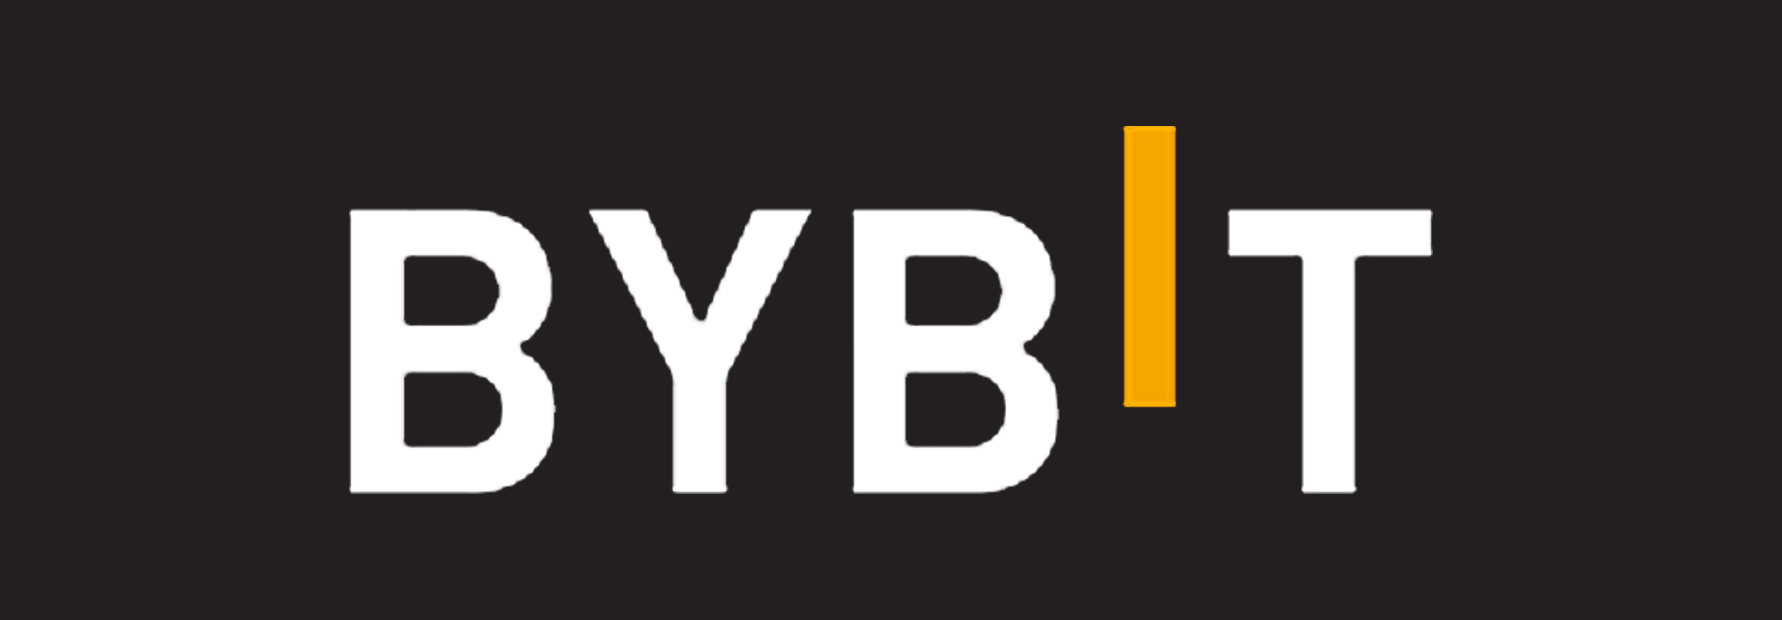 bybit-logo.jpg